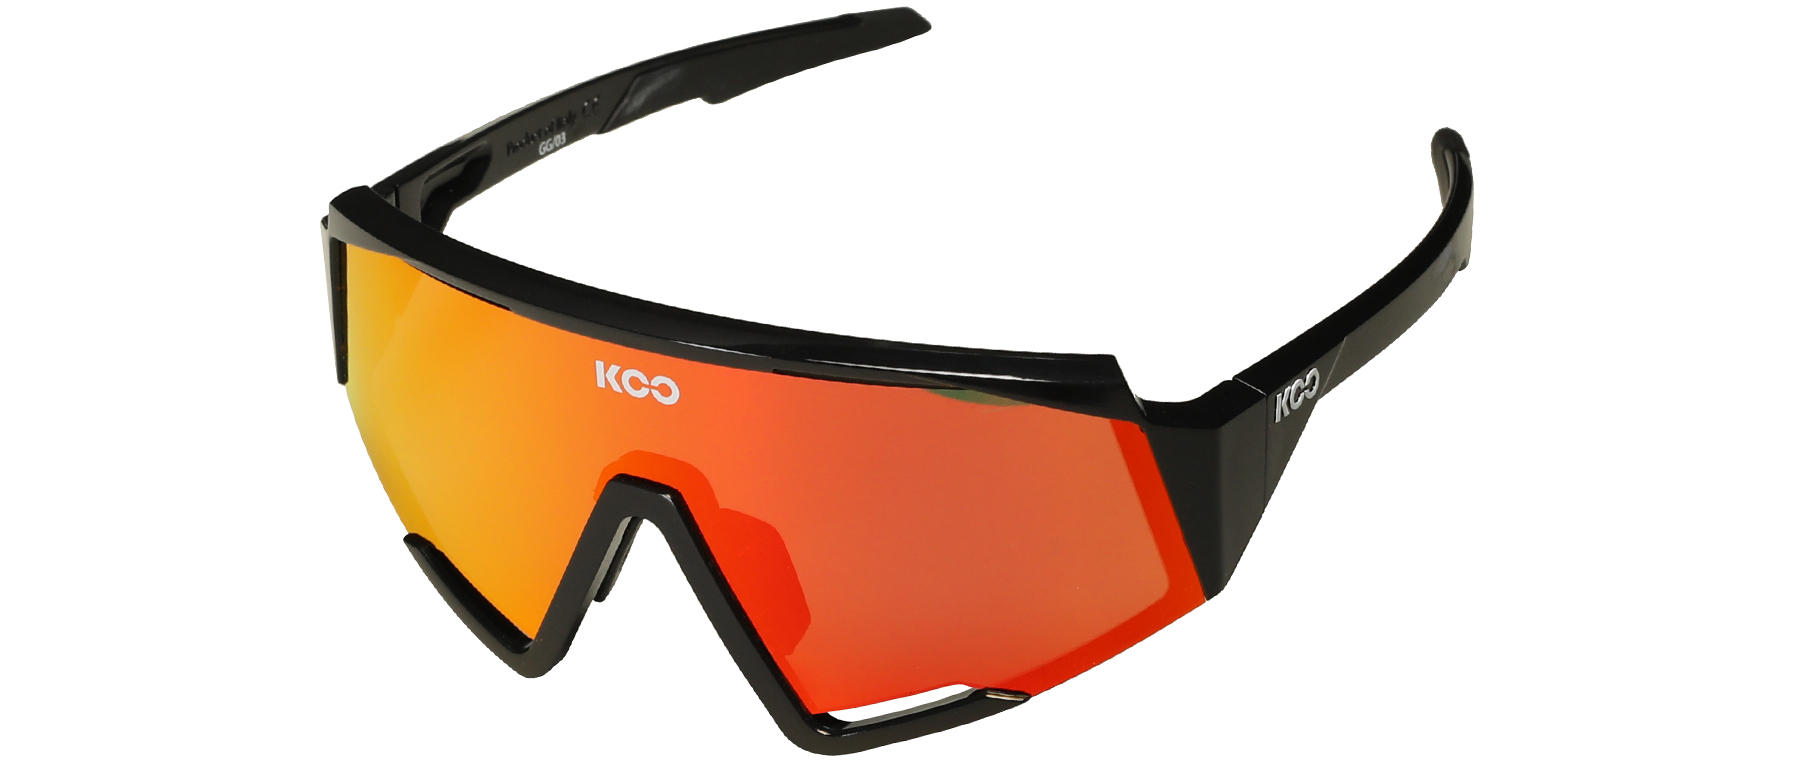 KASK Koo Spectro Eyewear